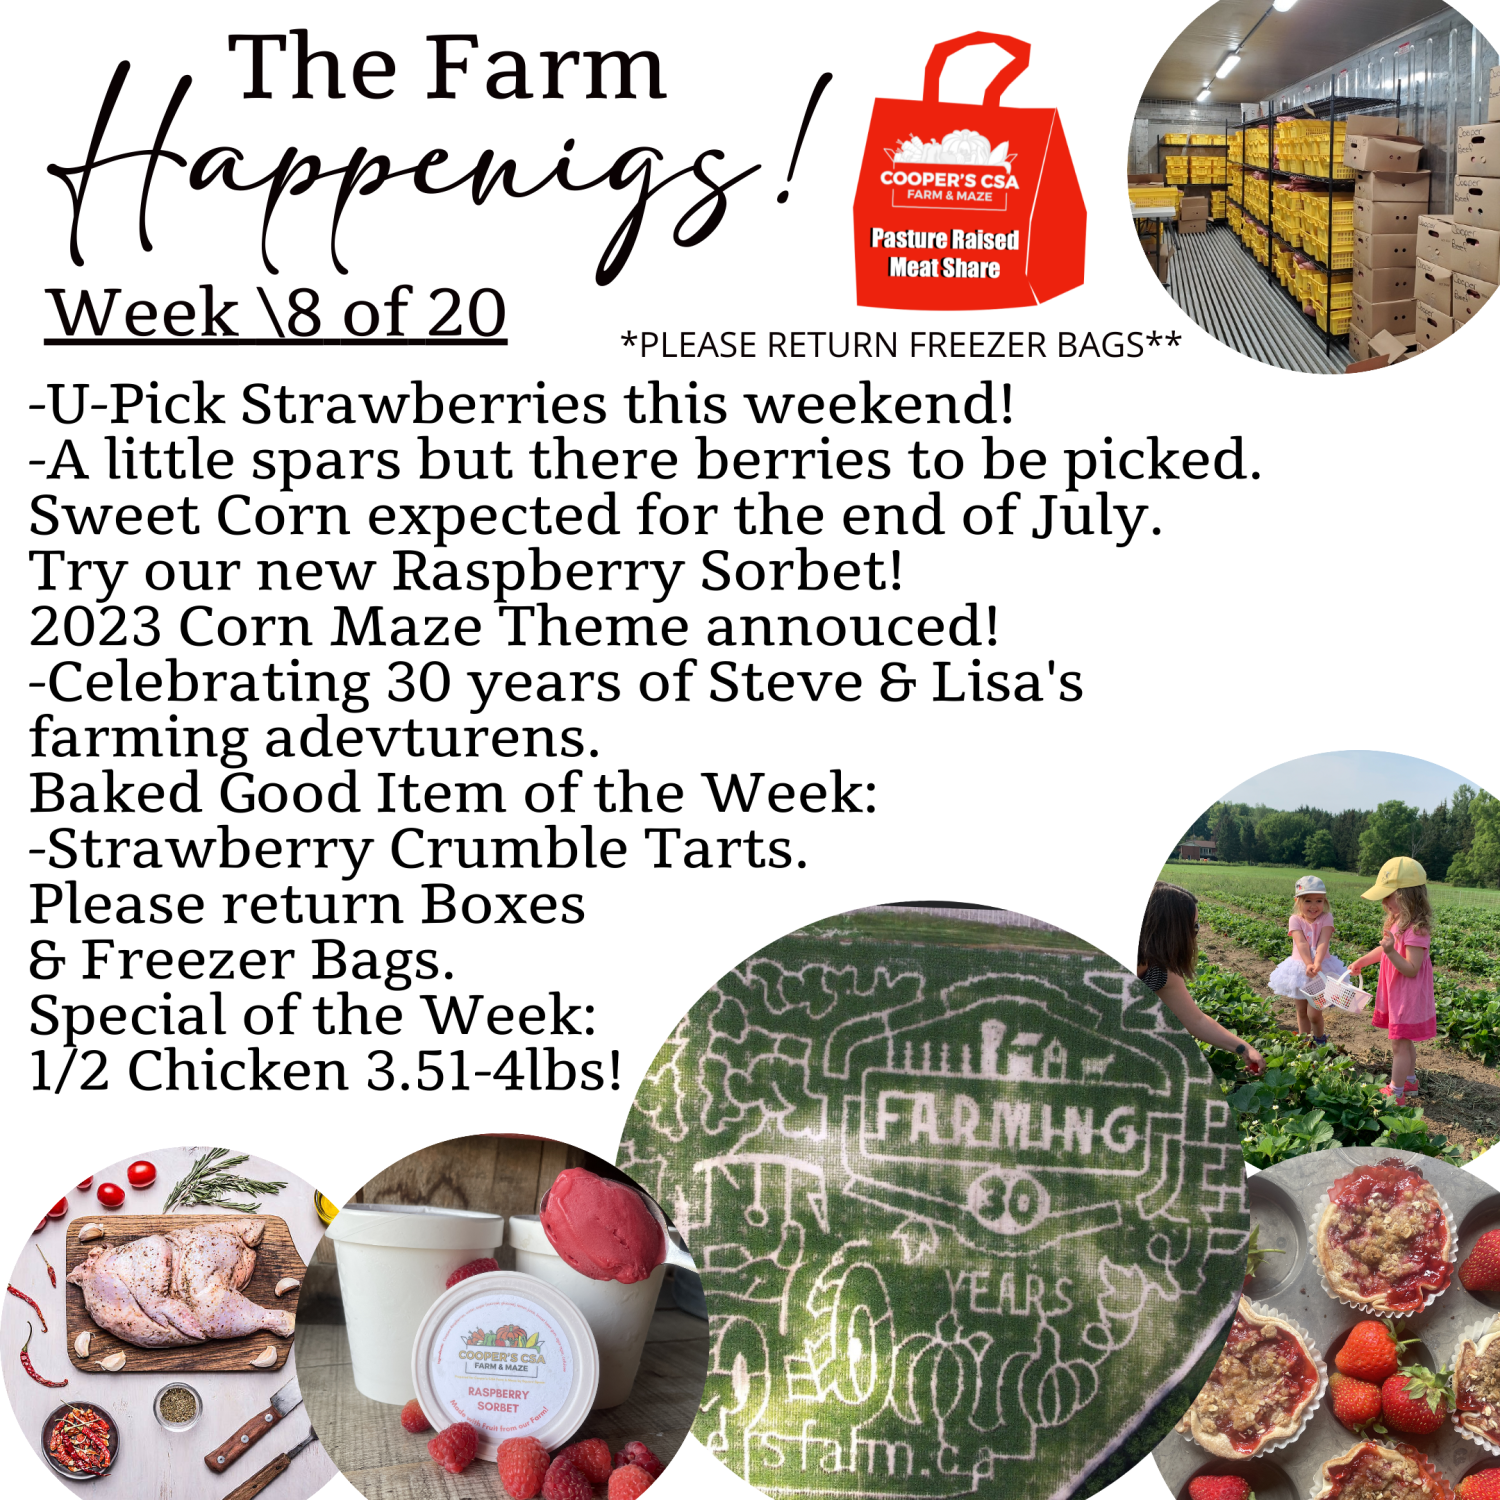 Next Happening: "Pasture Meat Shares"-Coopers CSA Farm Farm Happenings Week 8